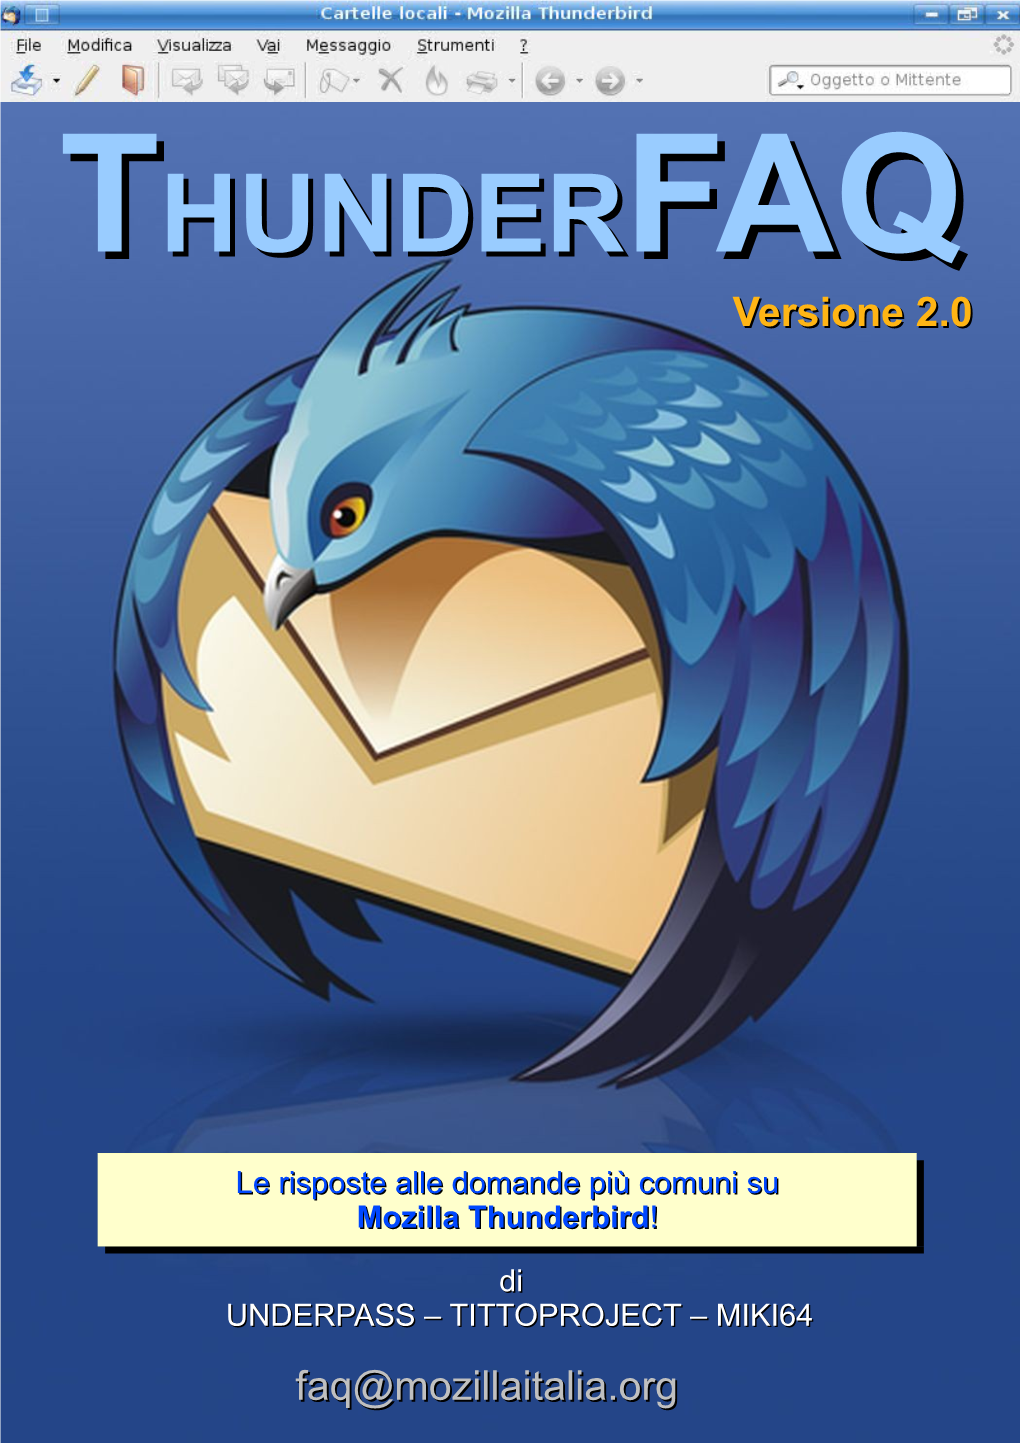 Mozilla Thunderbird!